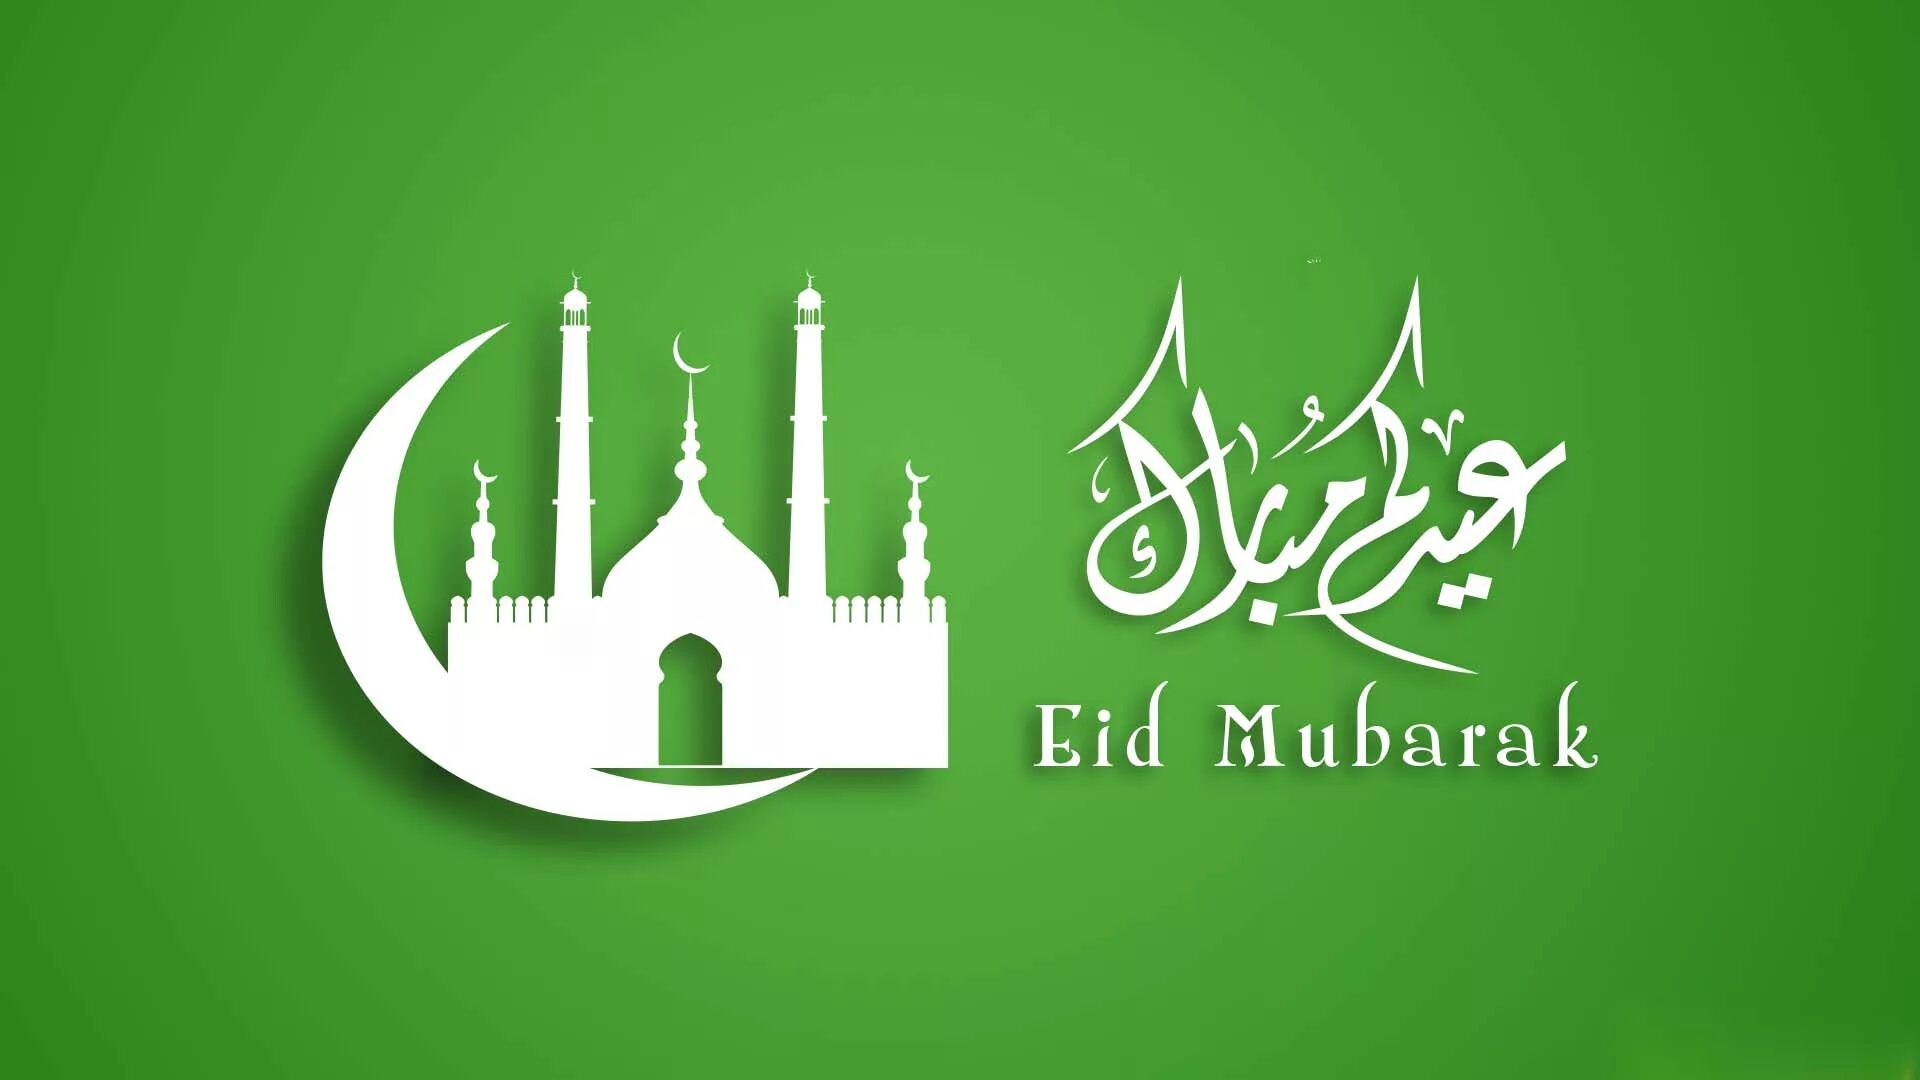 Eid mubarak перевод. Рамадан фон. Рамадан мубарак. Курбан байрам фон. ИД Рамазан мубарак.